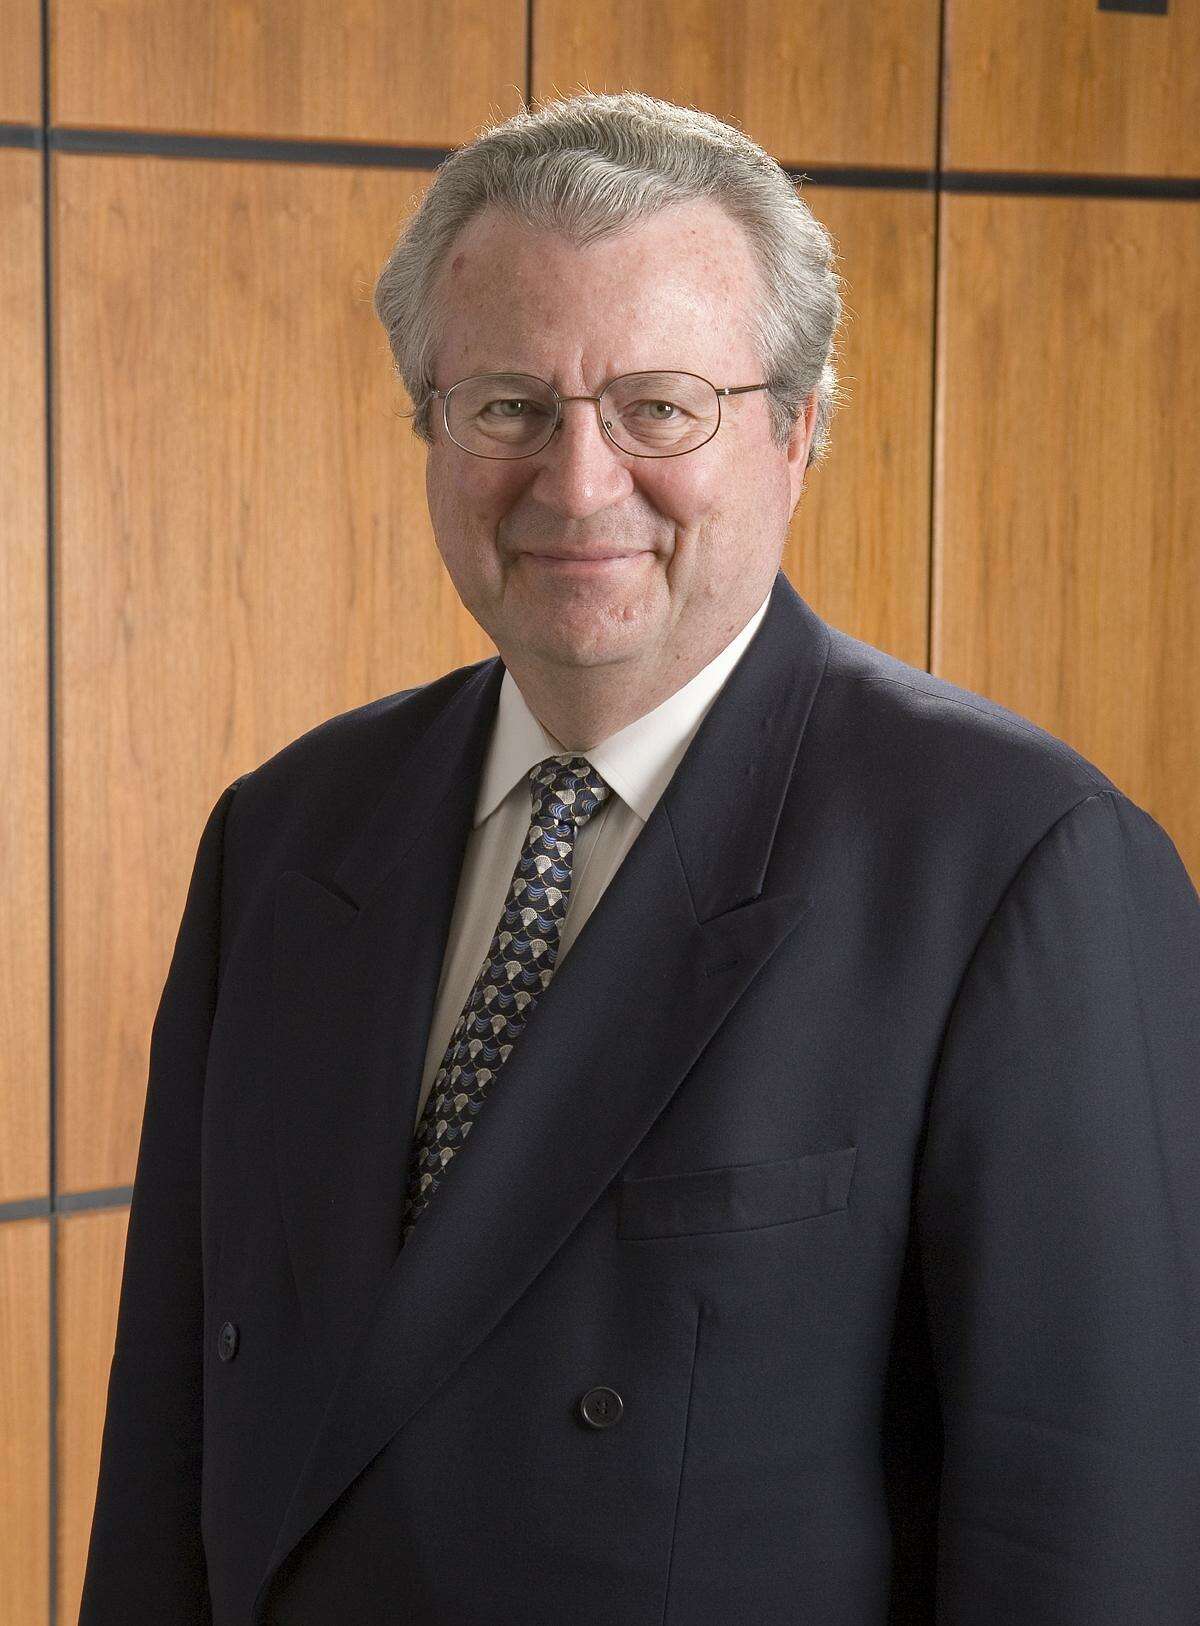 John Hofmeister in 2009.